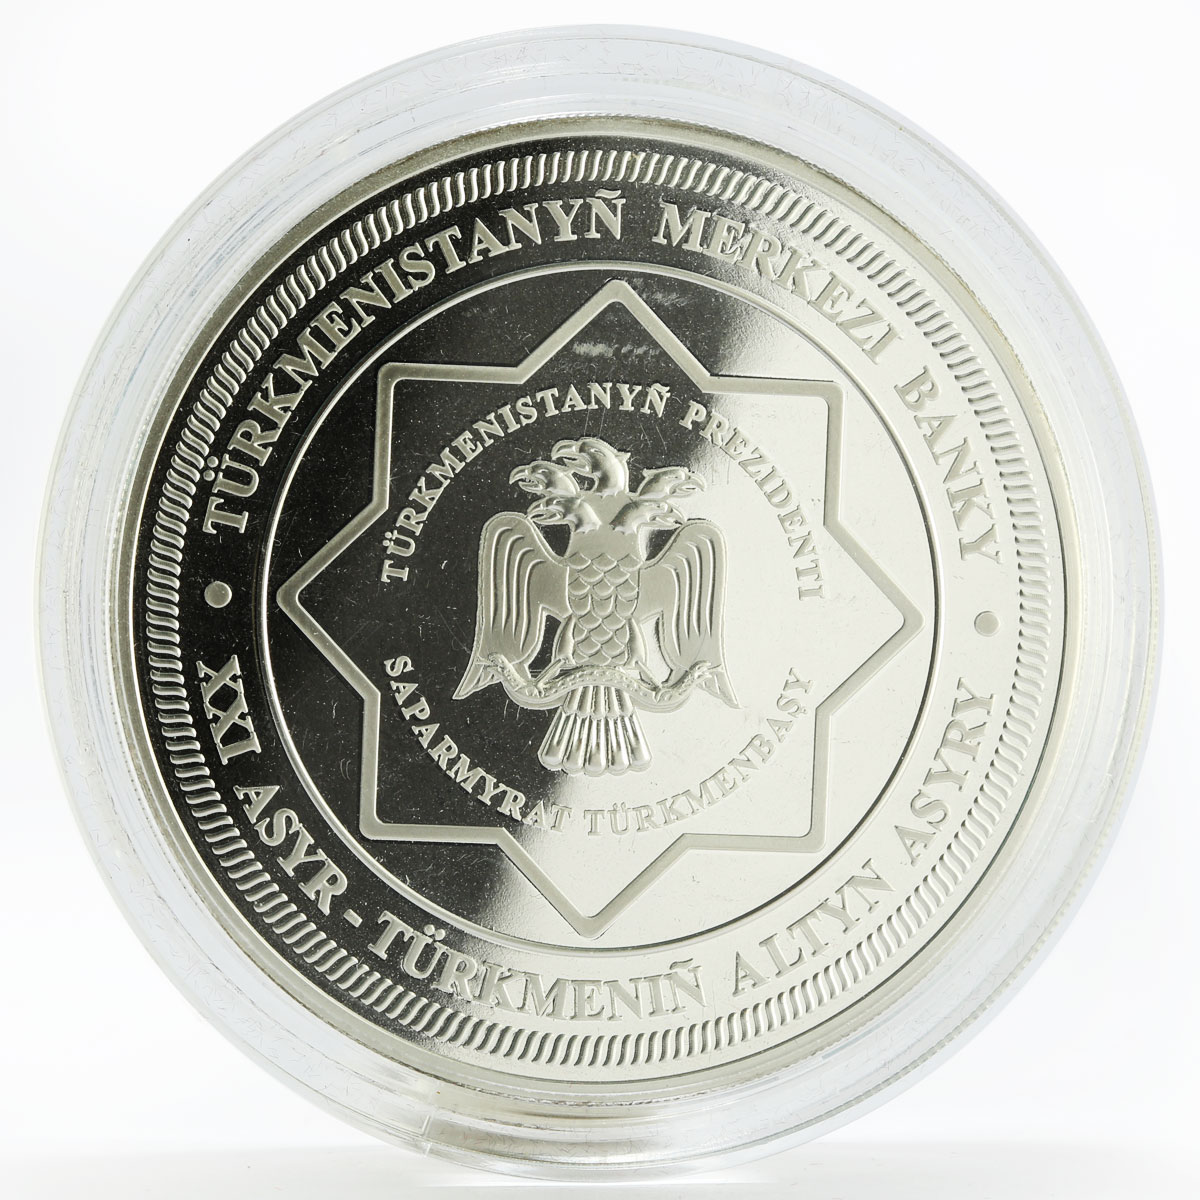 Turkmenistan 500 manat Family tree 65 anniversary of President silver coin 2005